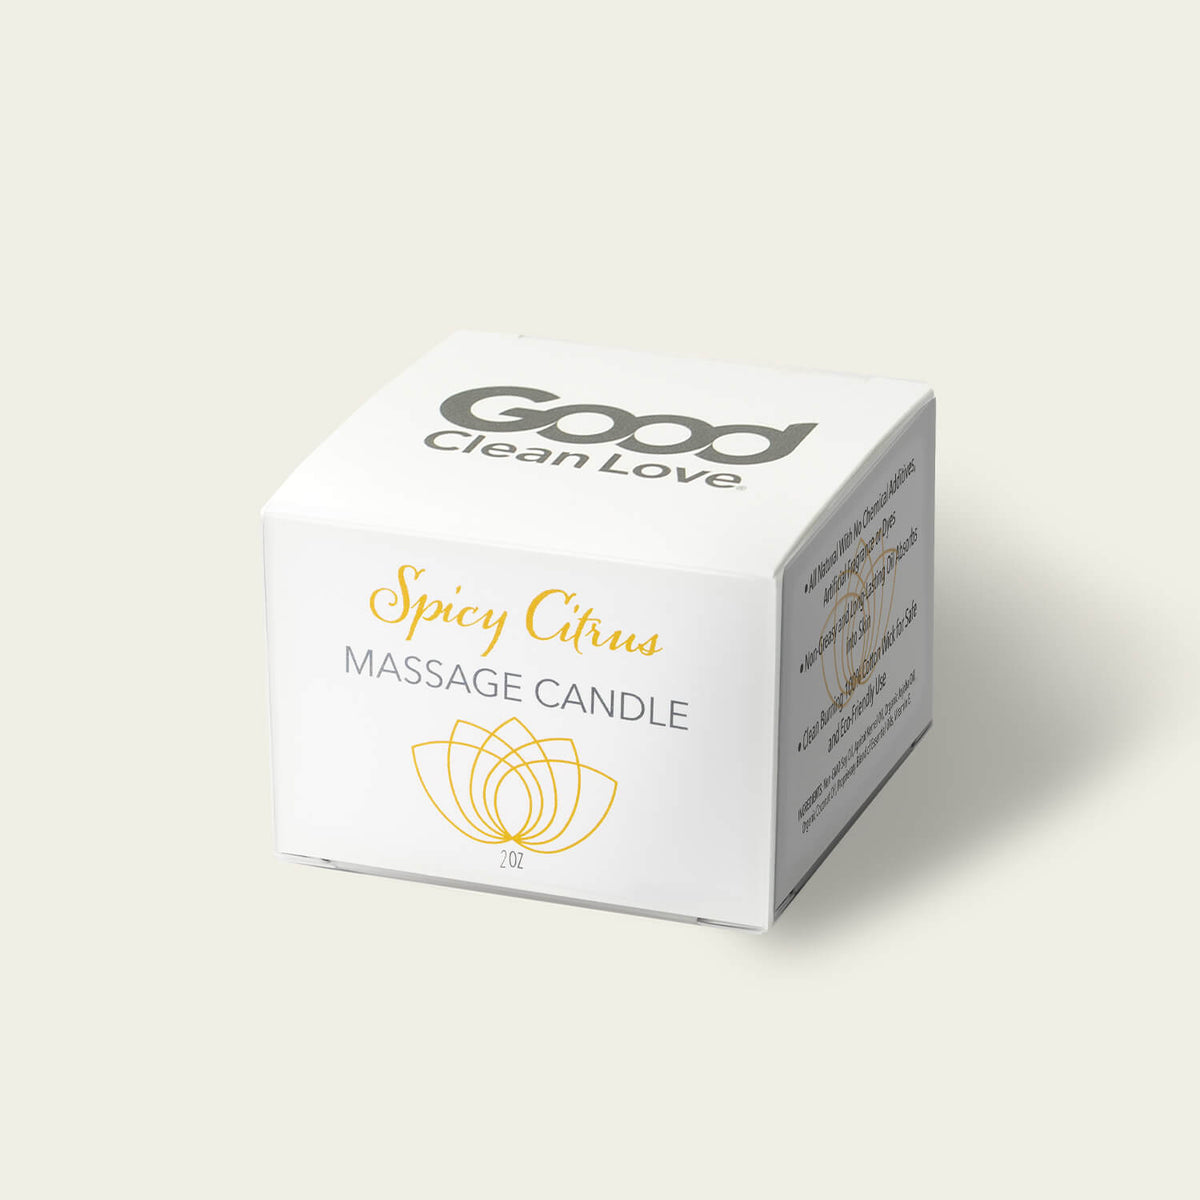 Spicy Citrus Massage Candle 2 oz